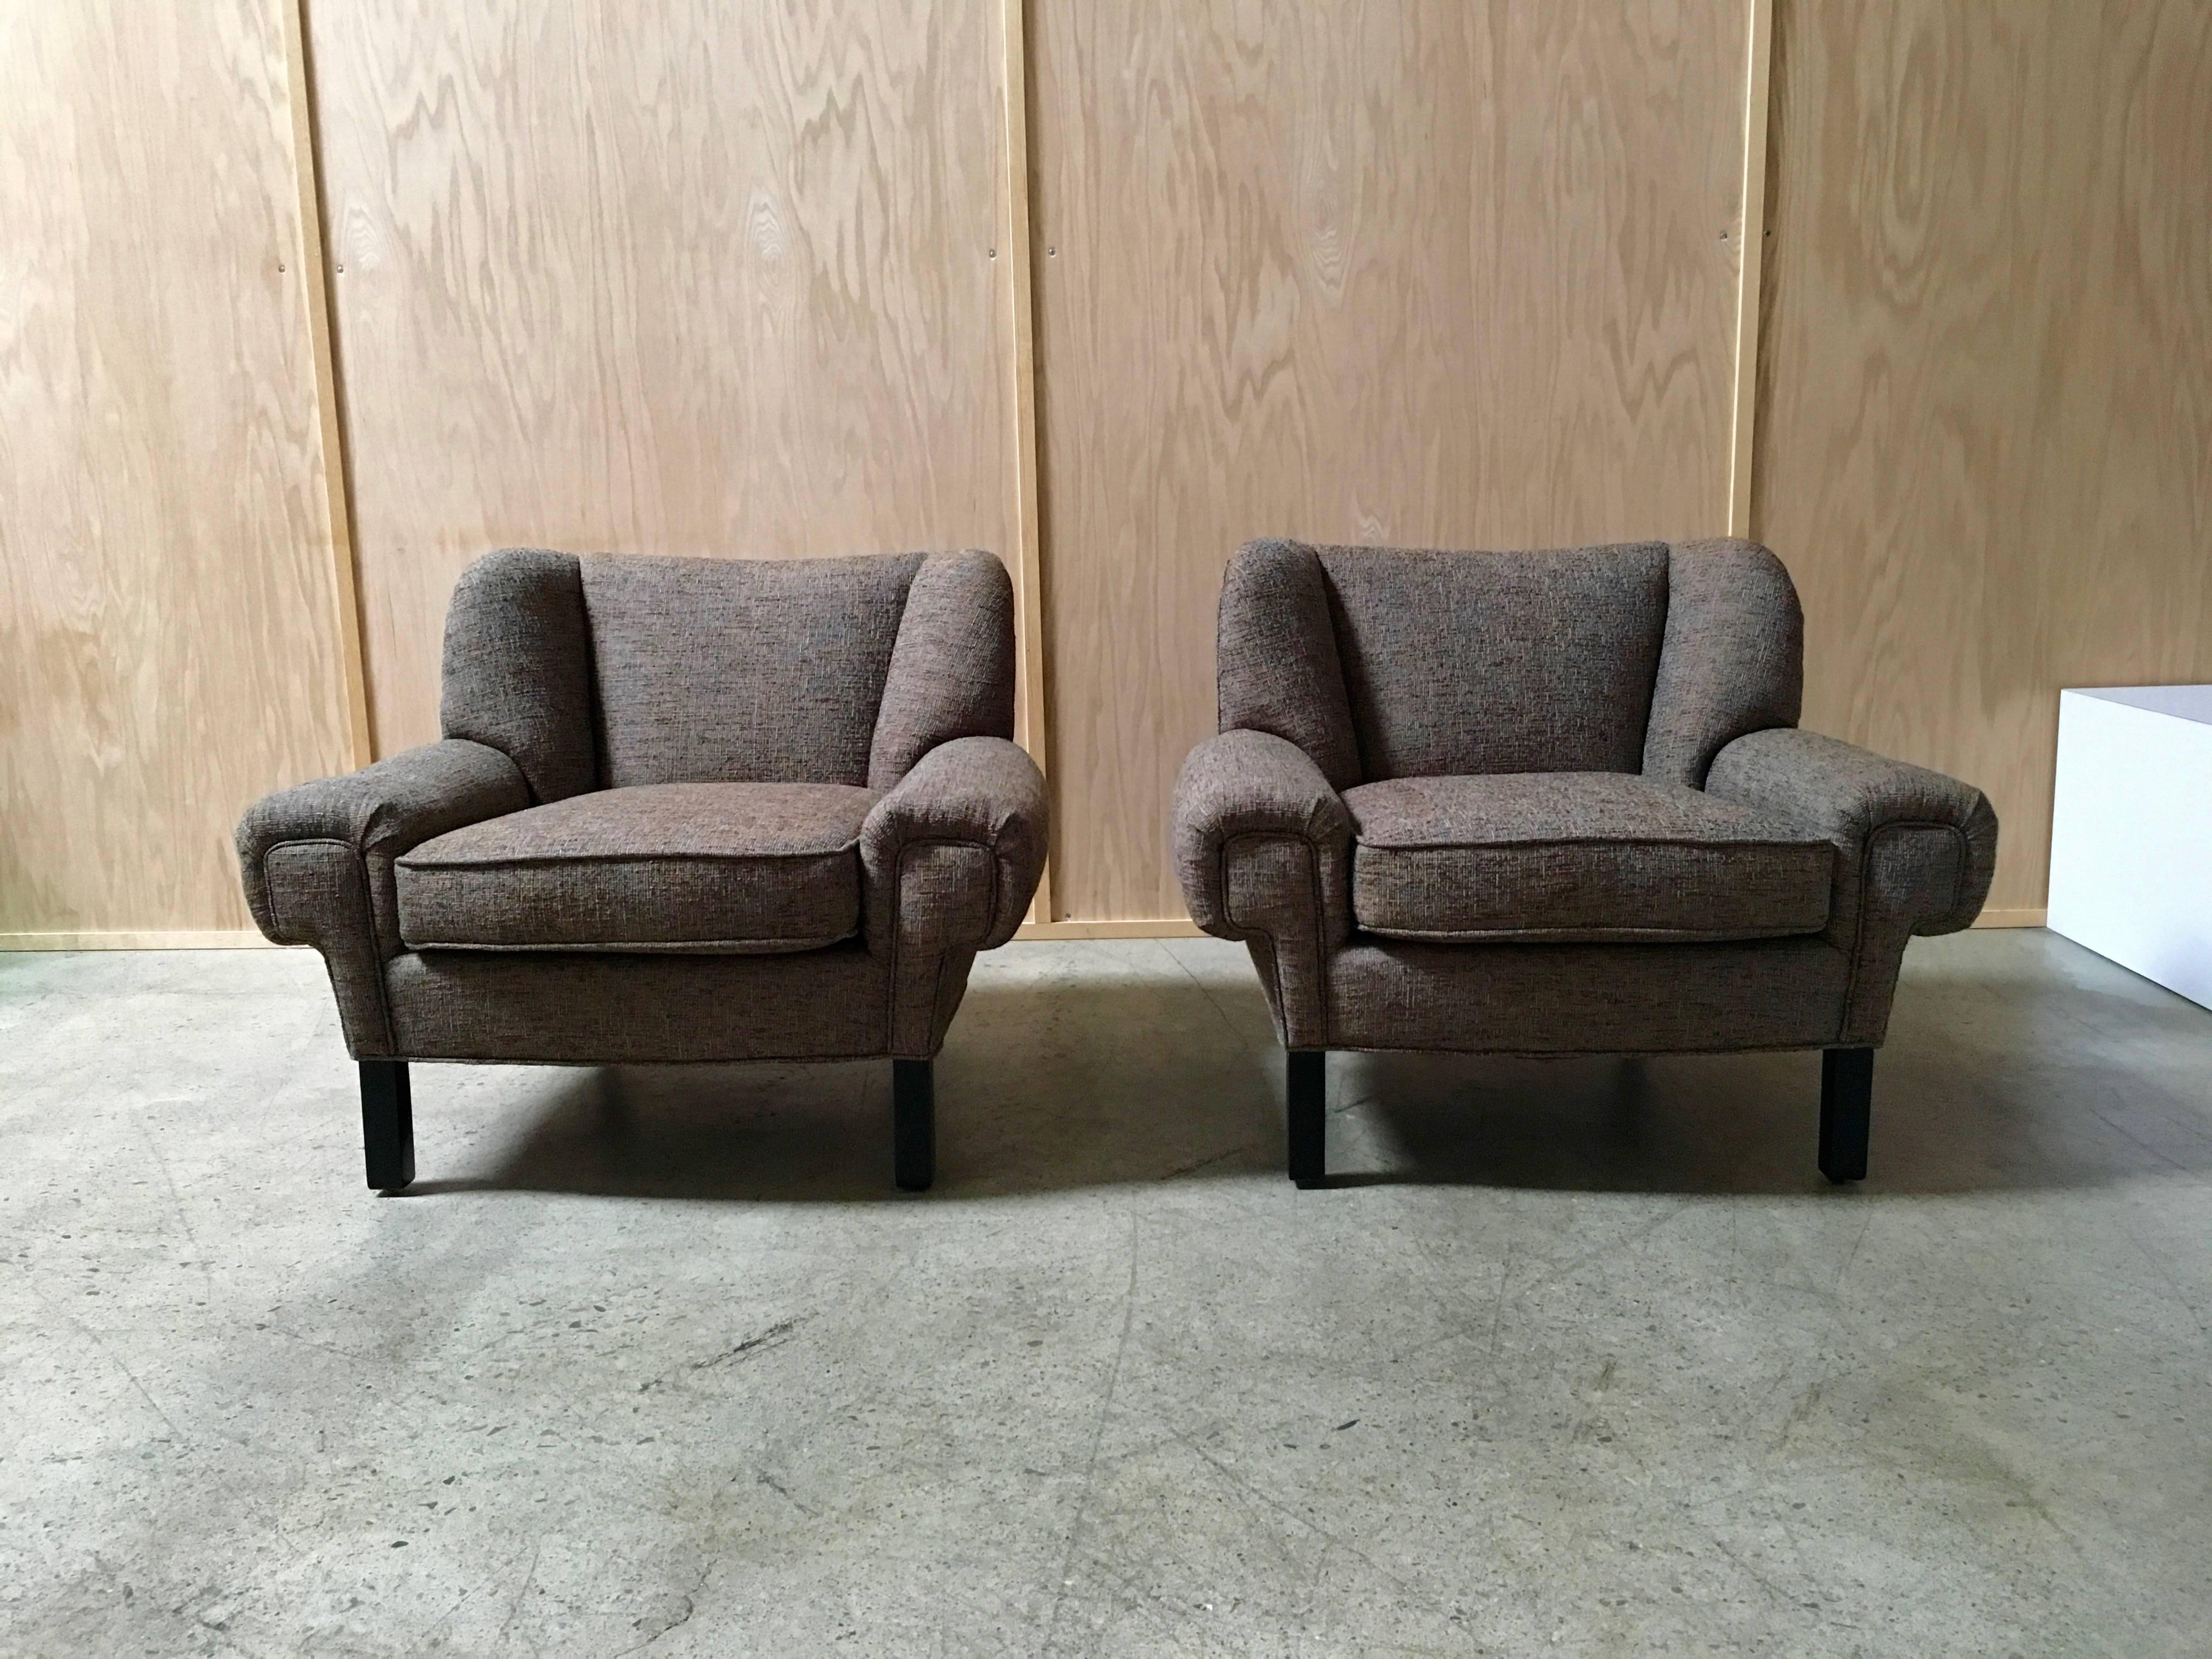 Pair of Paul Laszlo lounge chairs.